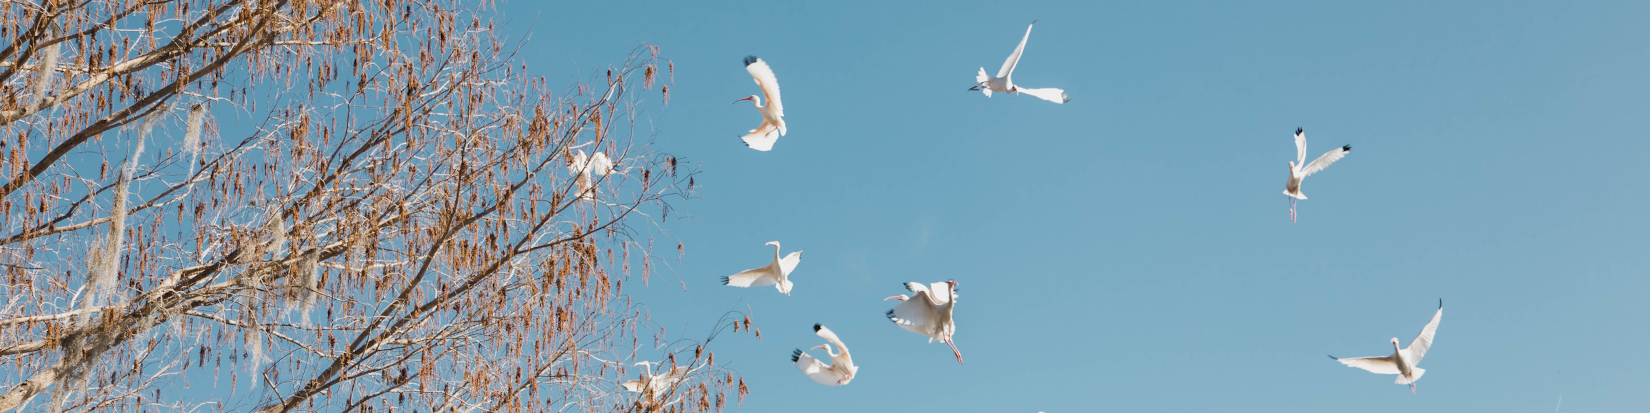 An image of birds flying near a tree.